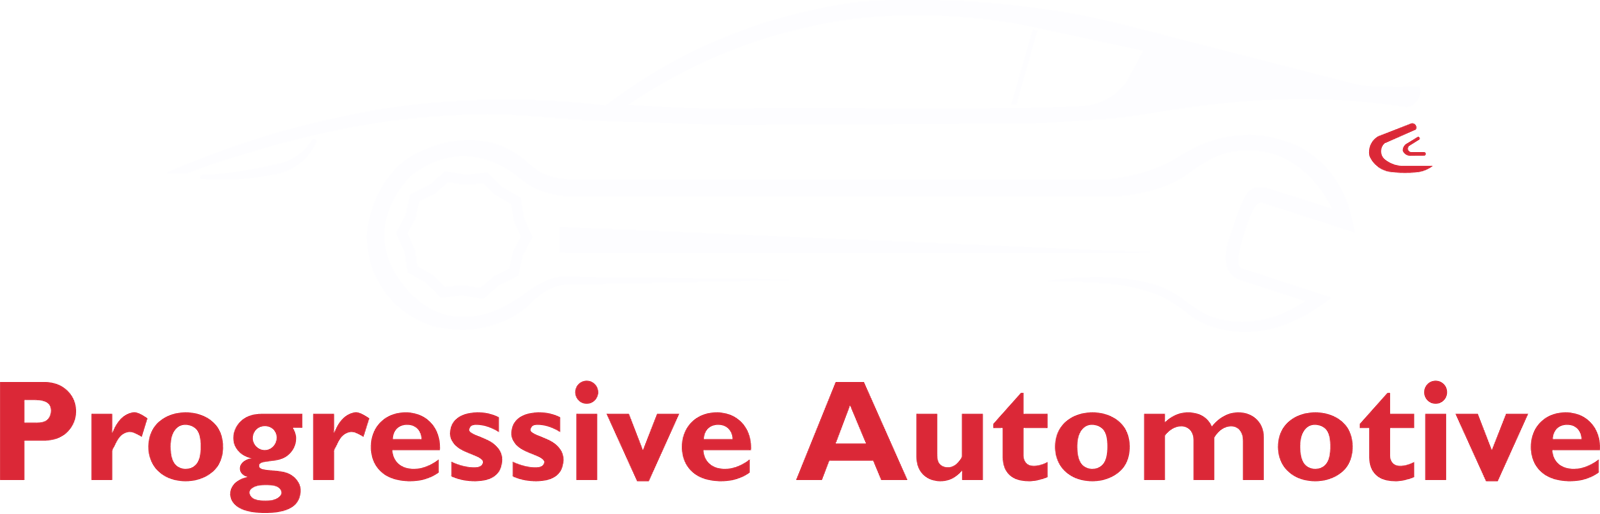 logo progressive automotive tauriko tauranga